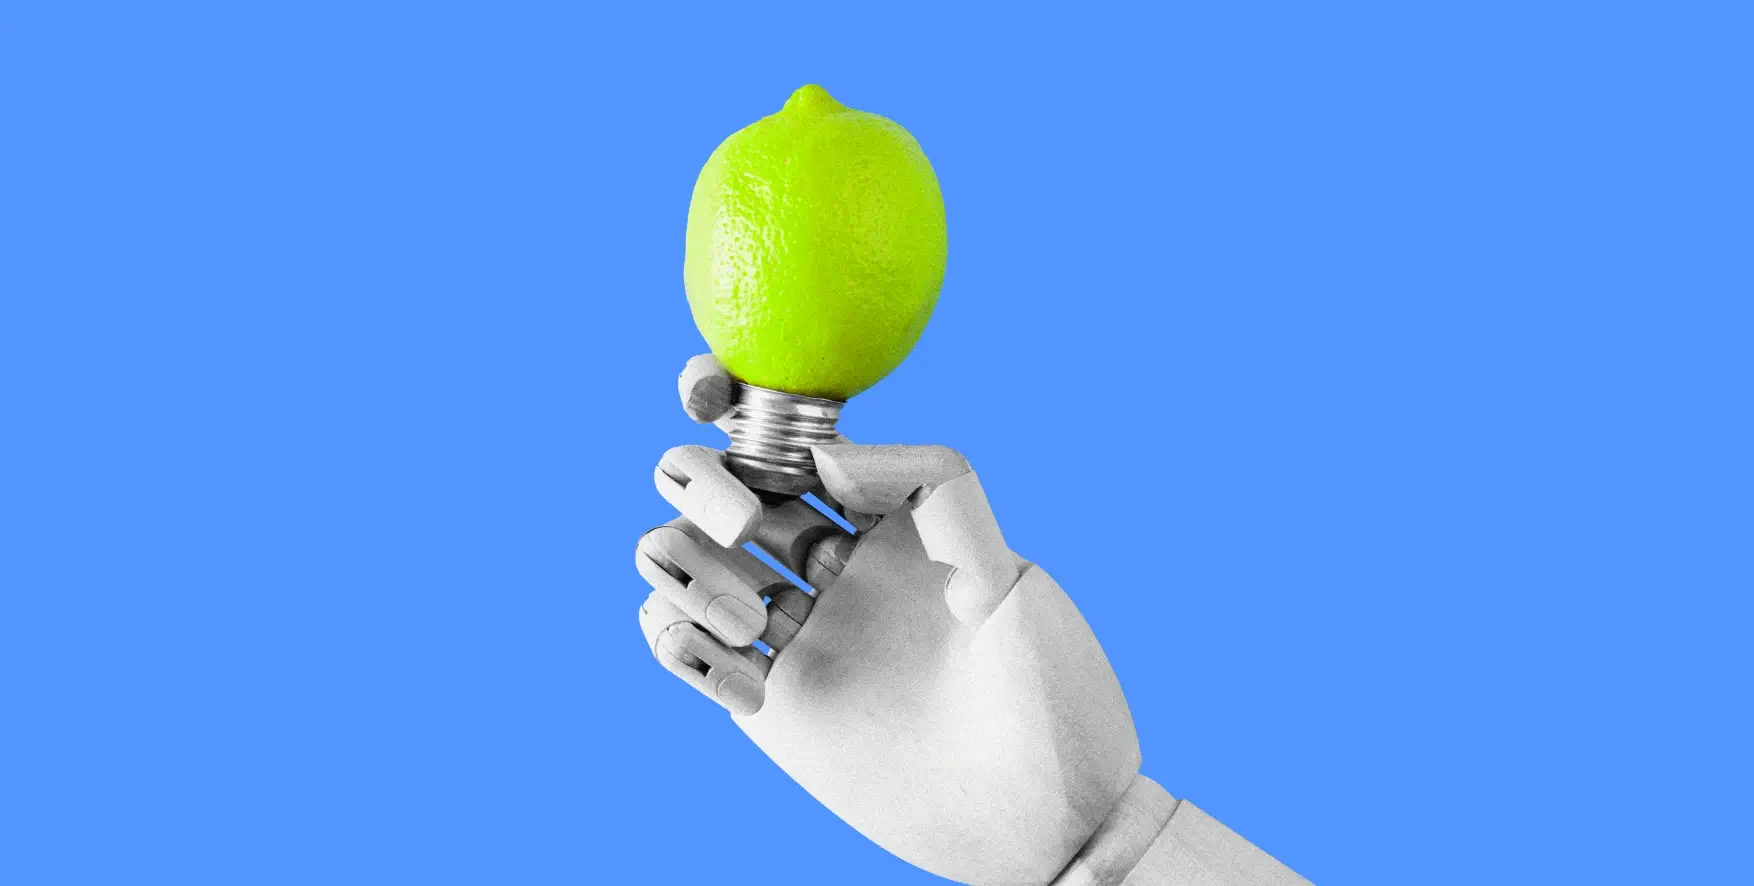 a robot hand holding a light bulb in the shape of a lemon